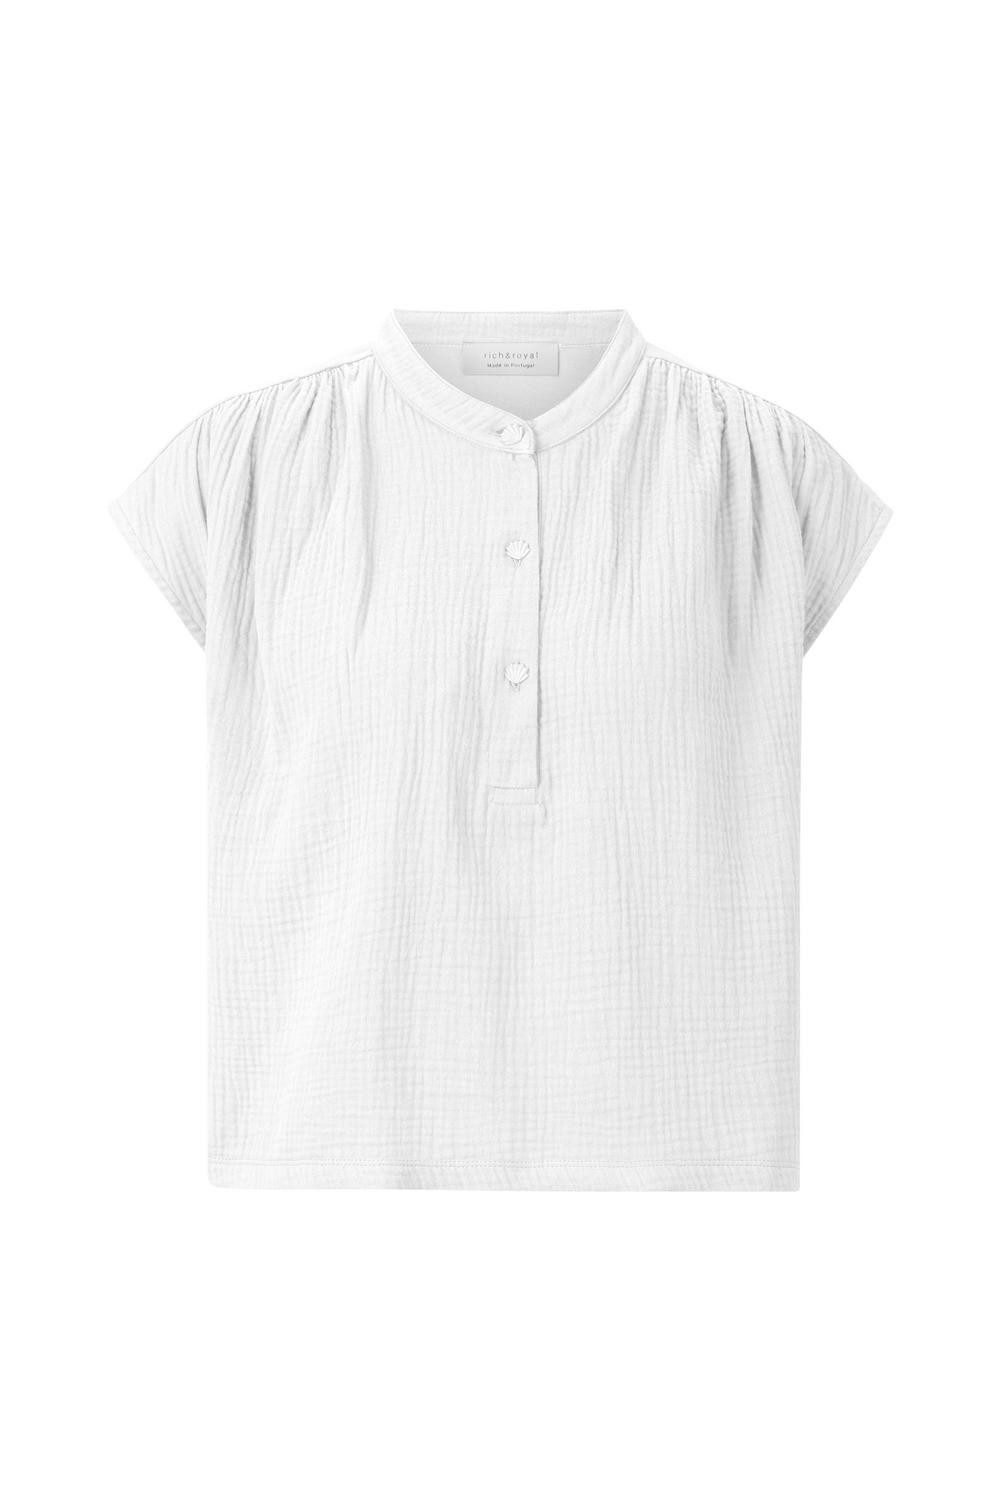 Rich & Royal Sweatshirt cotton musselin mix T-Shirt, white